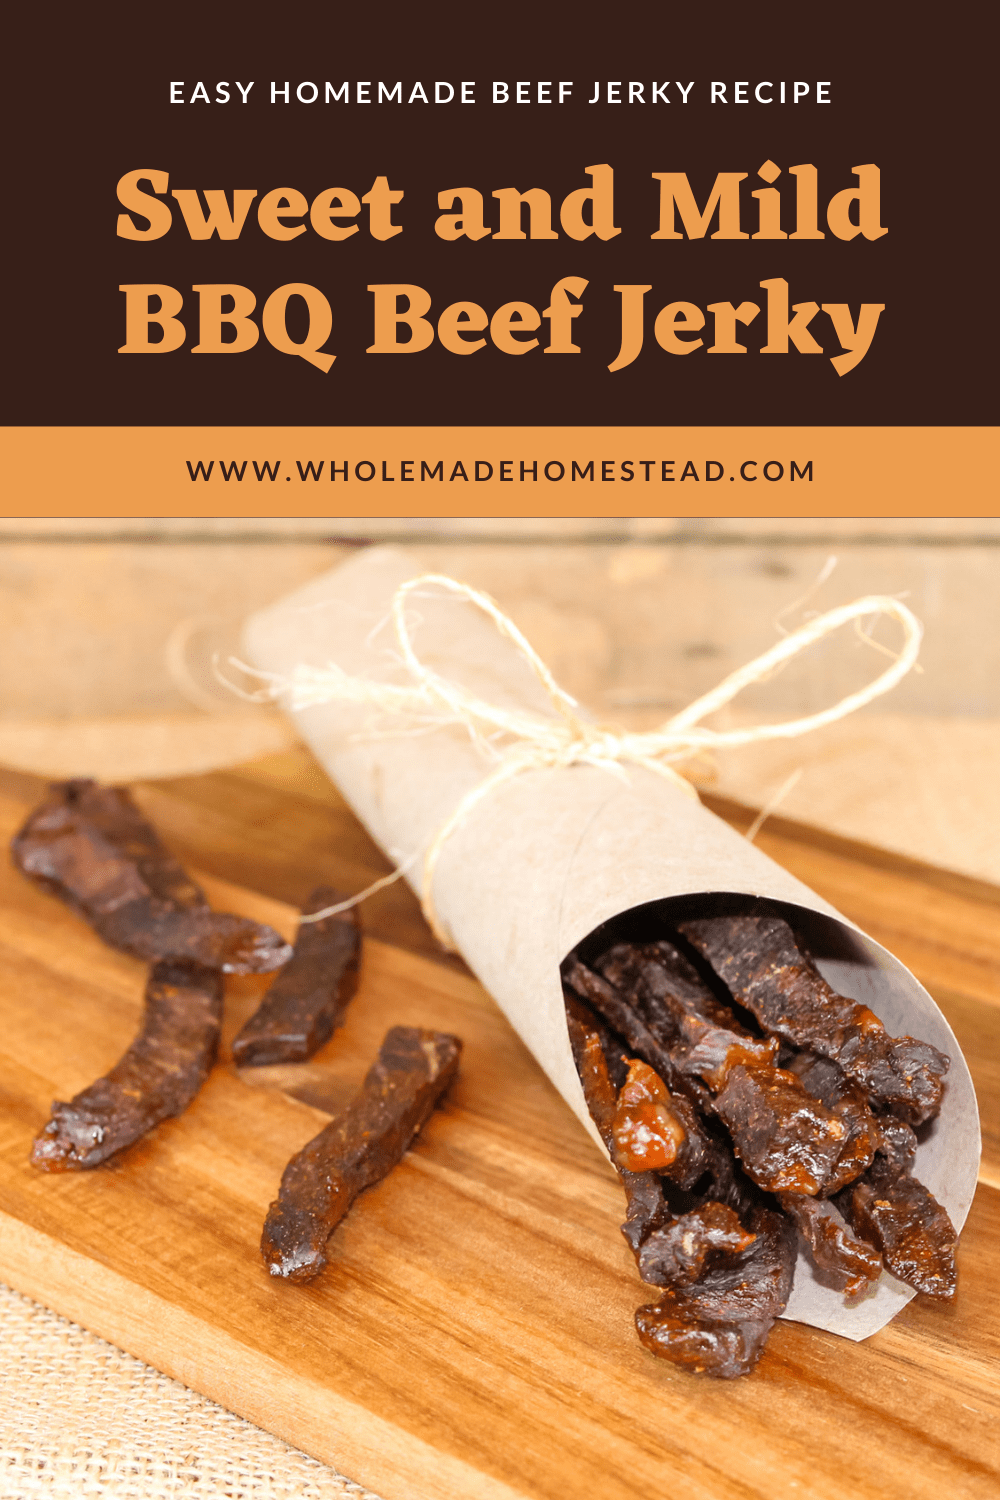 Homemade Beef Jerky Recipe With a Dehydrator